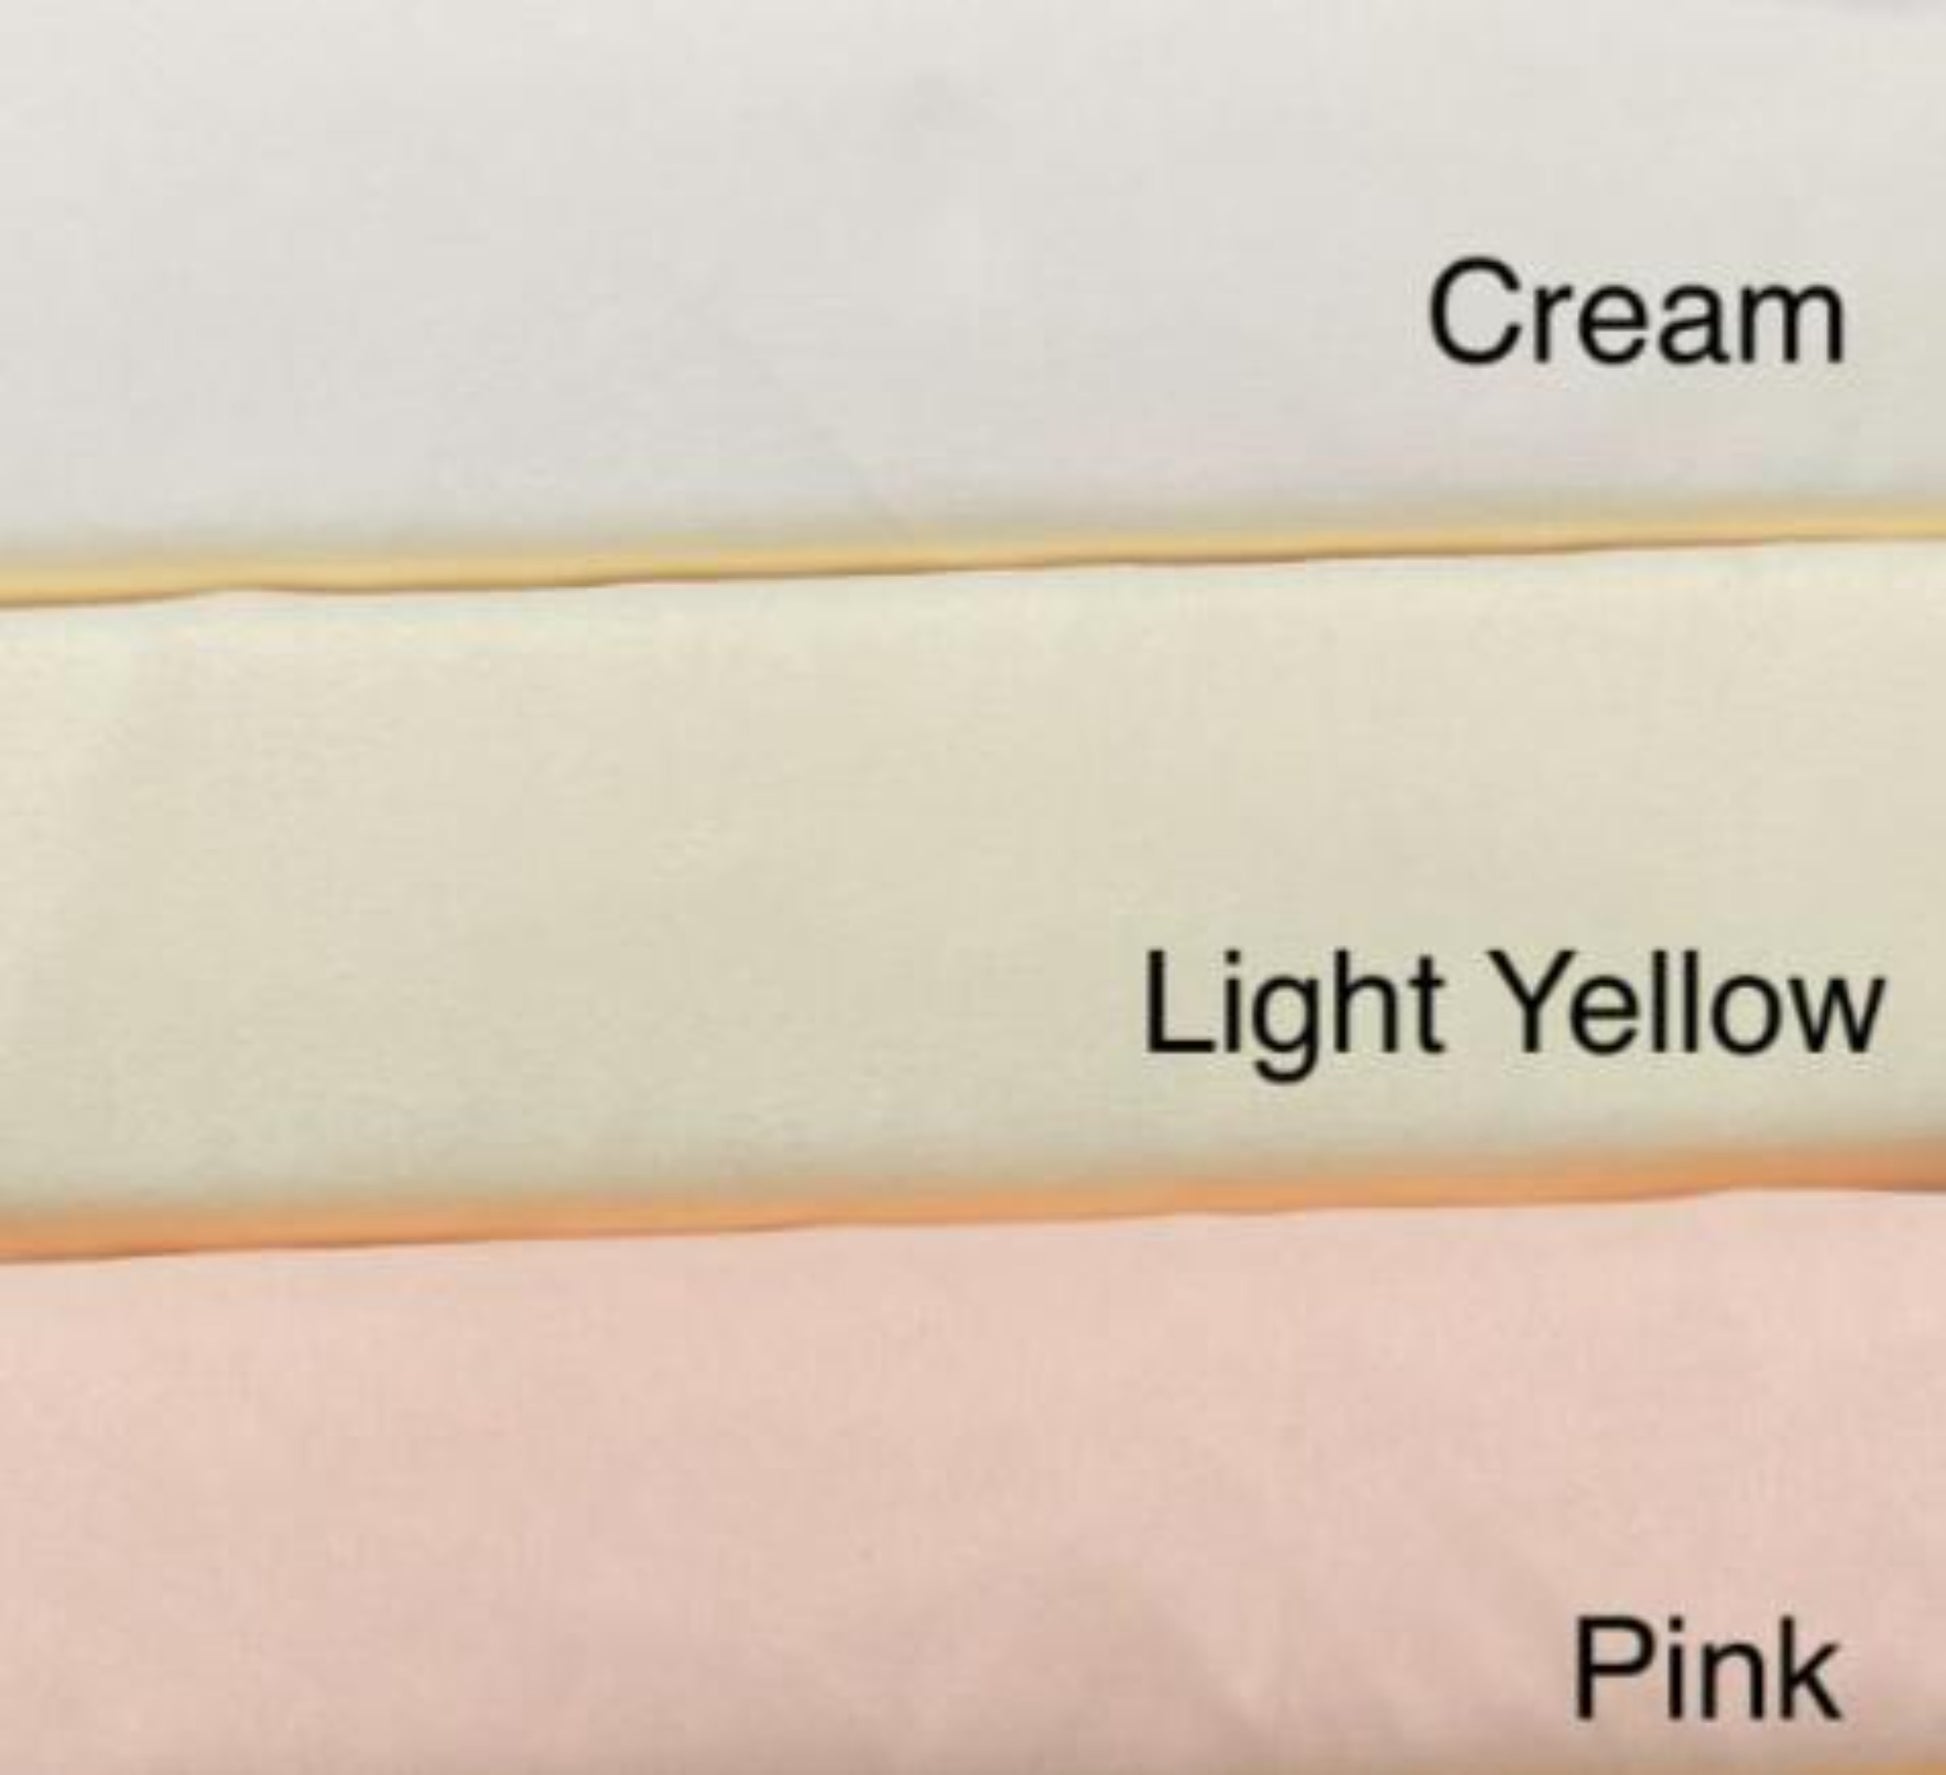 Duvet Cover Set (100% Polyester) - Cream, Light Yellow, Pink